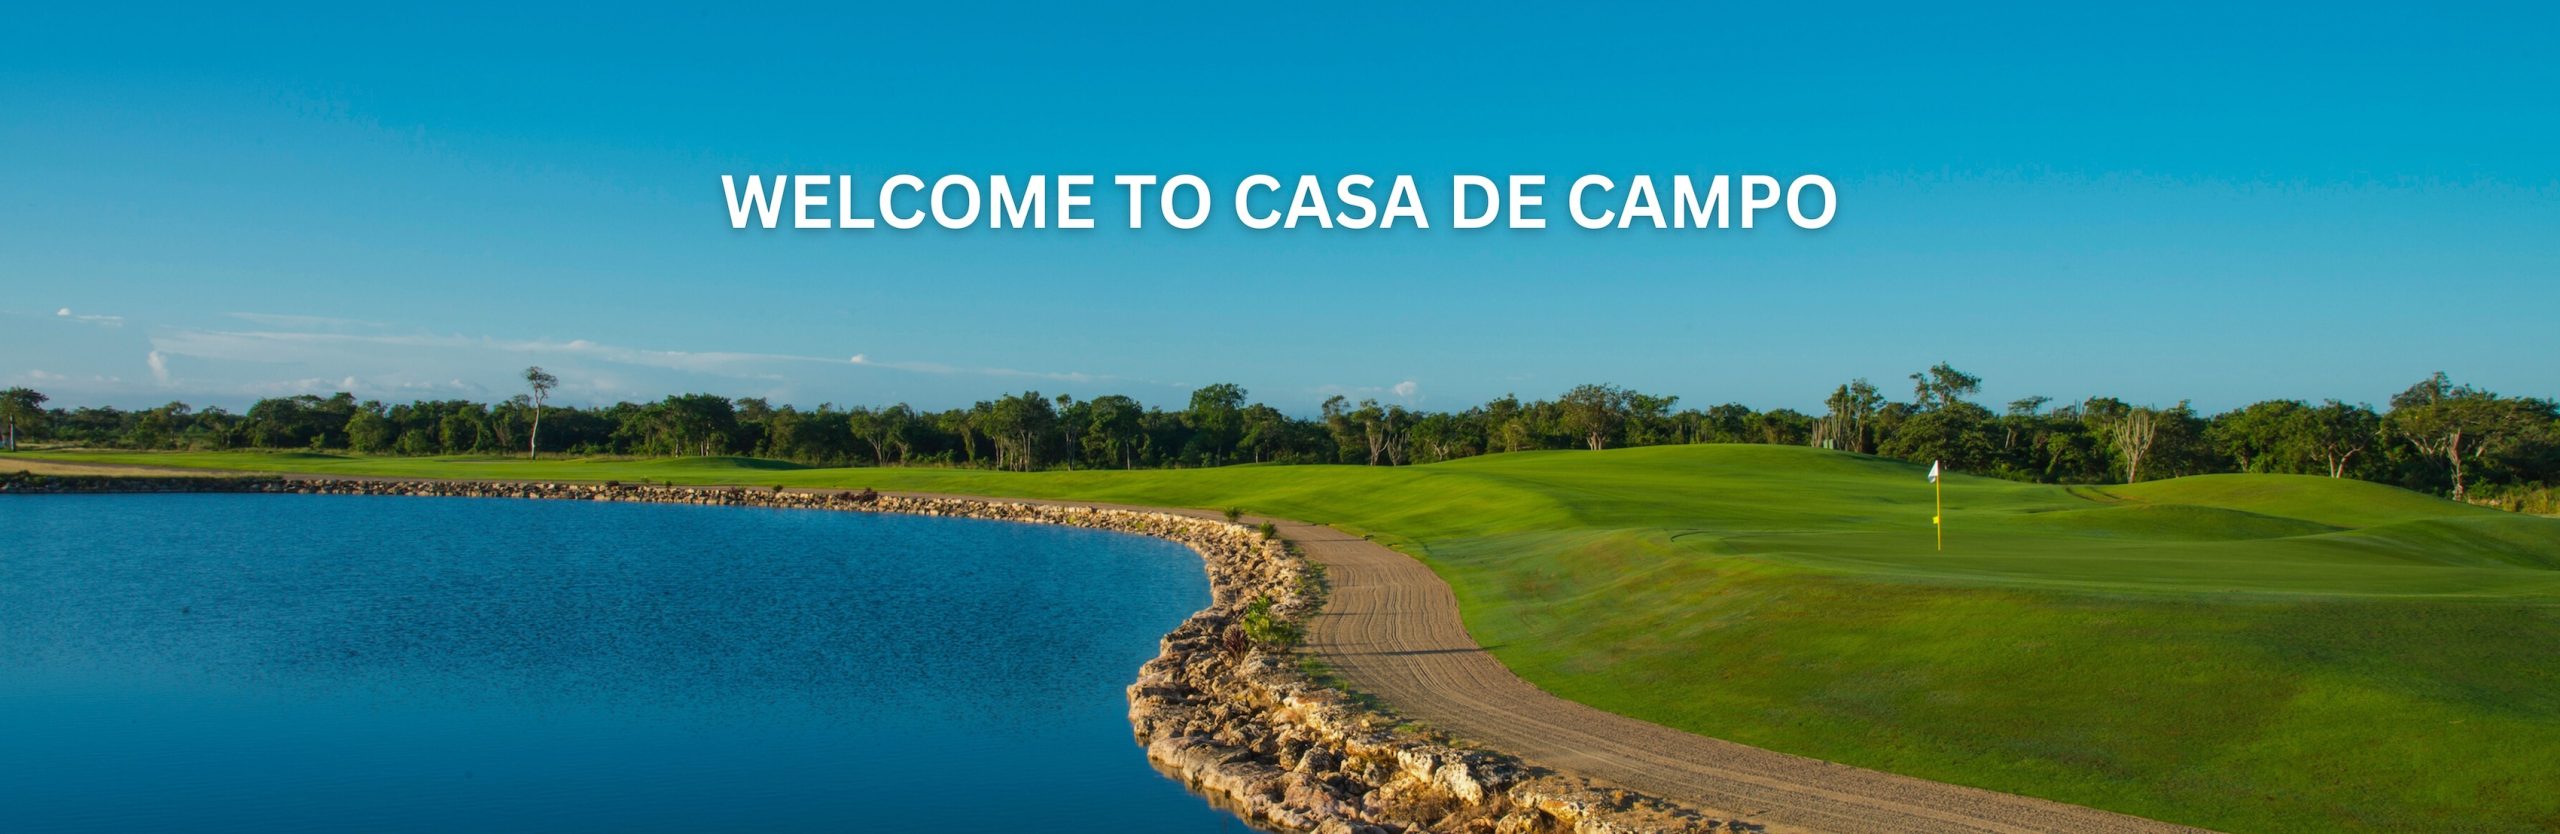 Welcome to Casa de Campo -